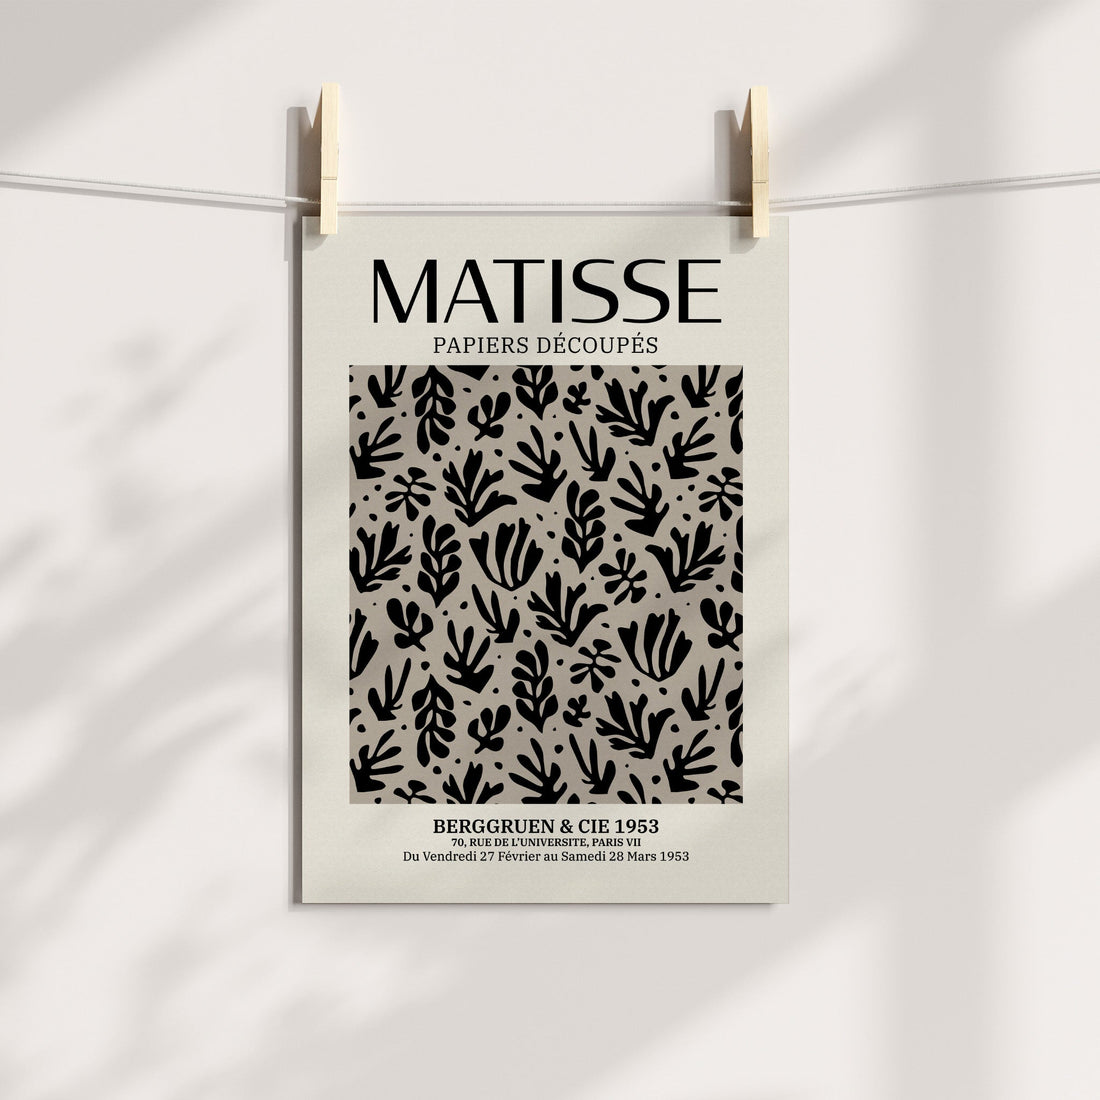 Monochrome Matisse Foliage Pattern - Henri Matisse Printable Art